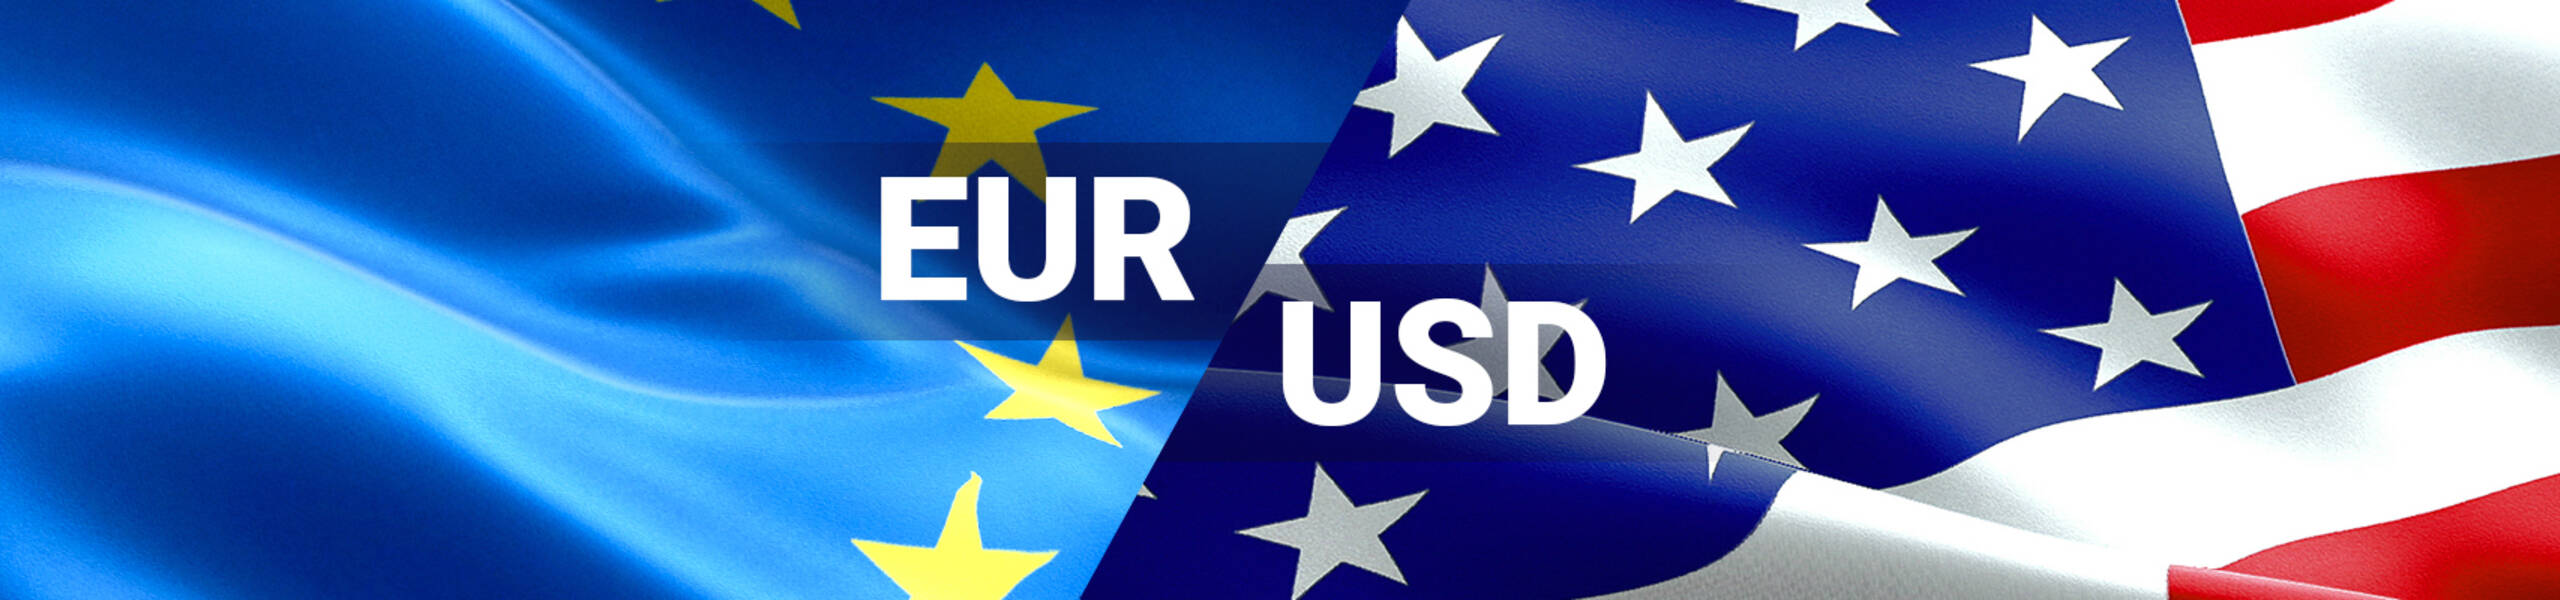 EUR/USD Resumen técnico fundamental de la semana